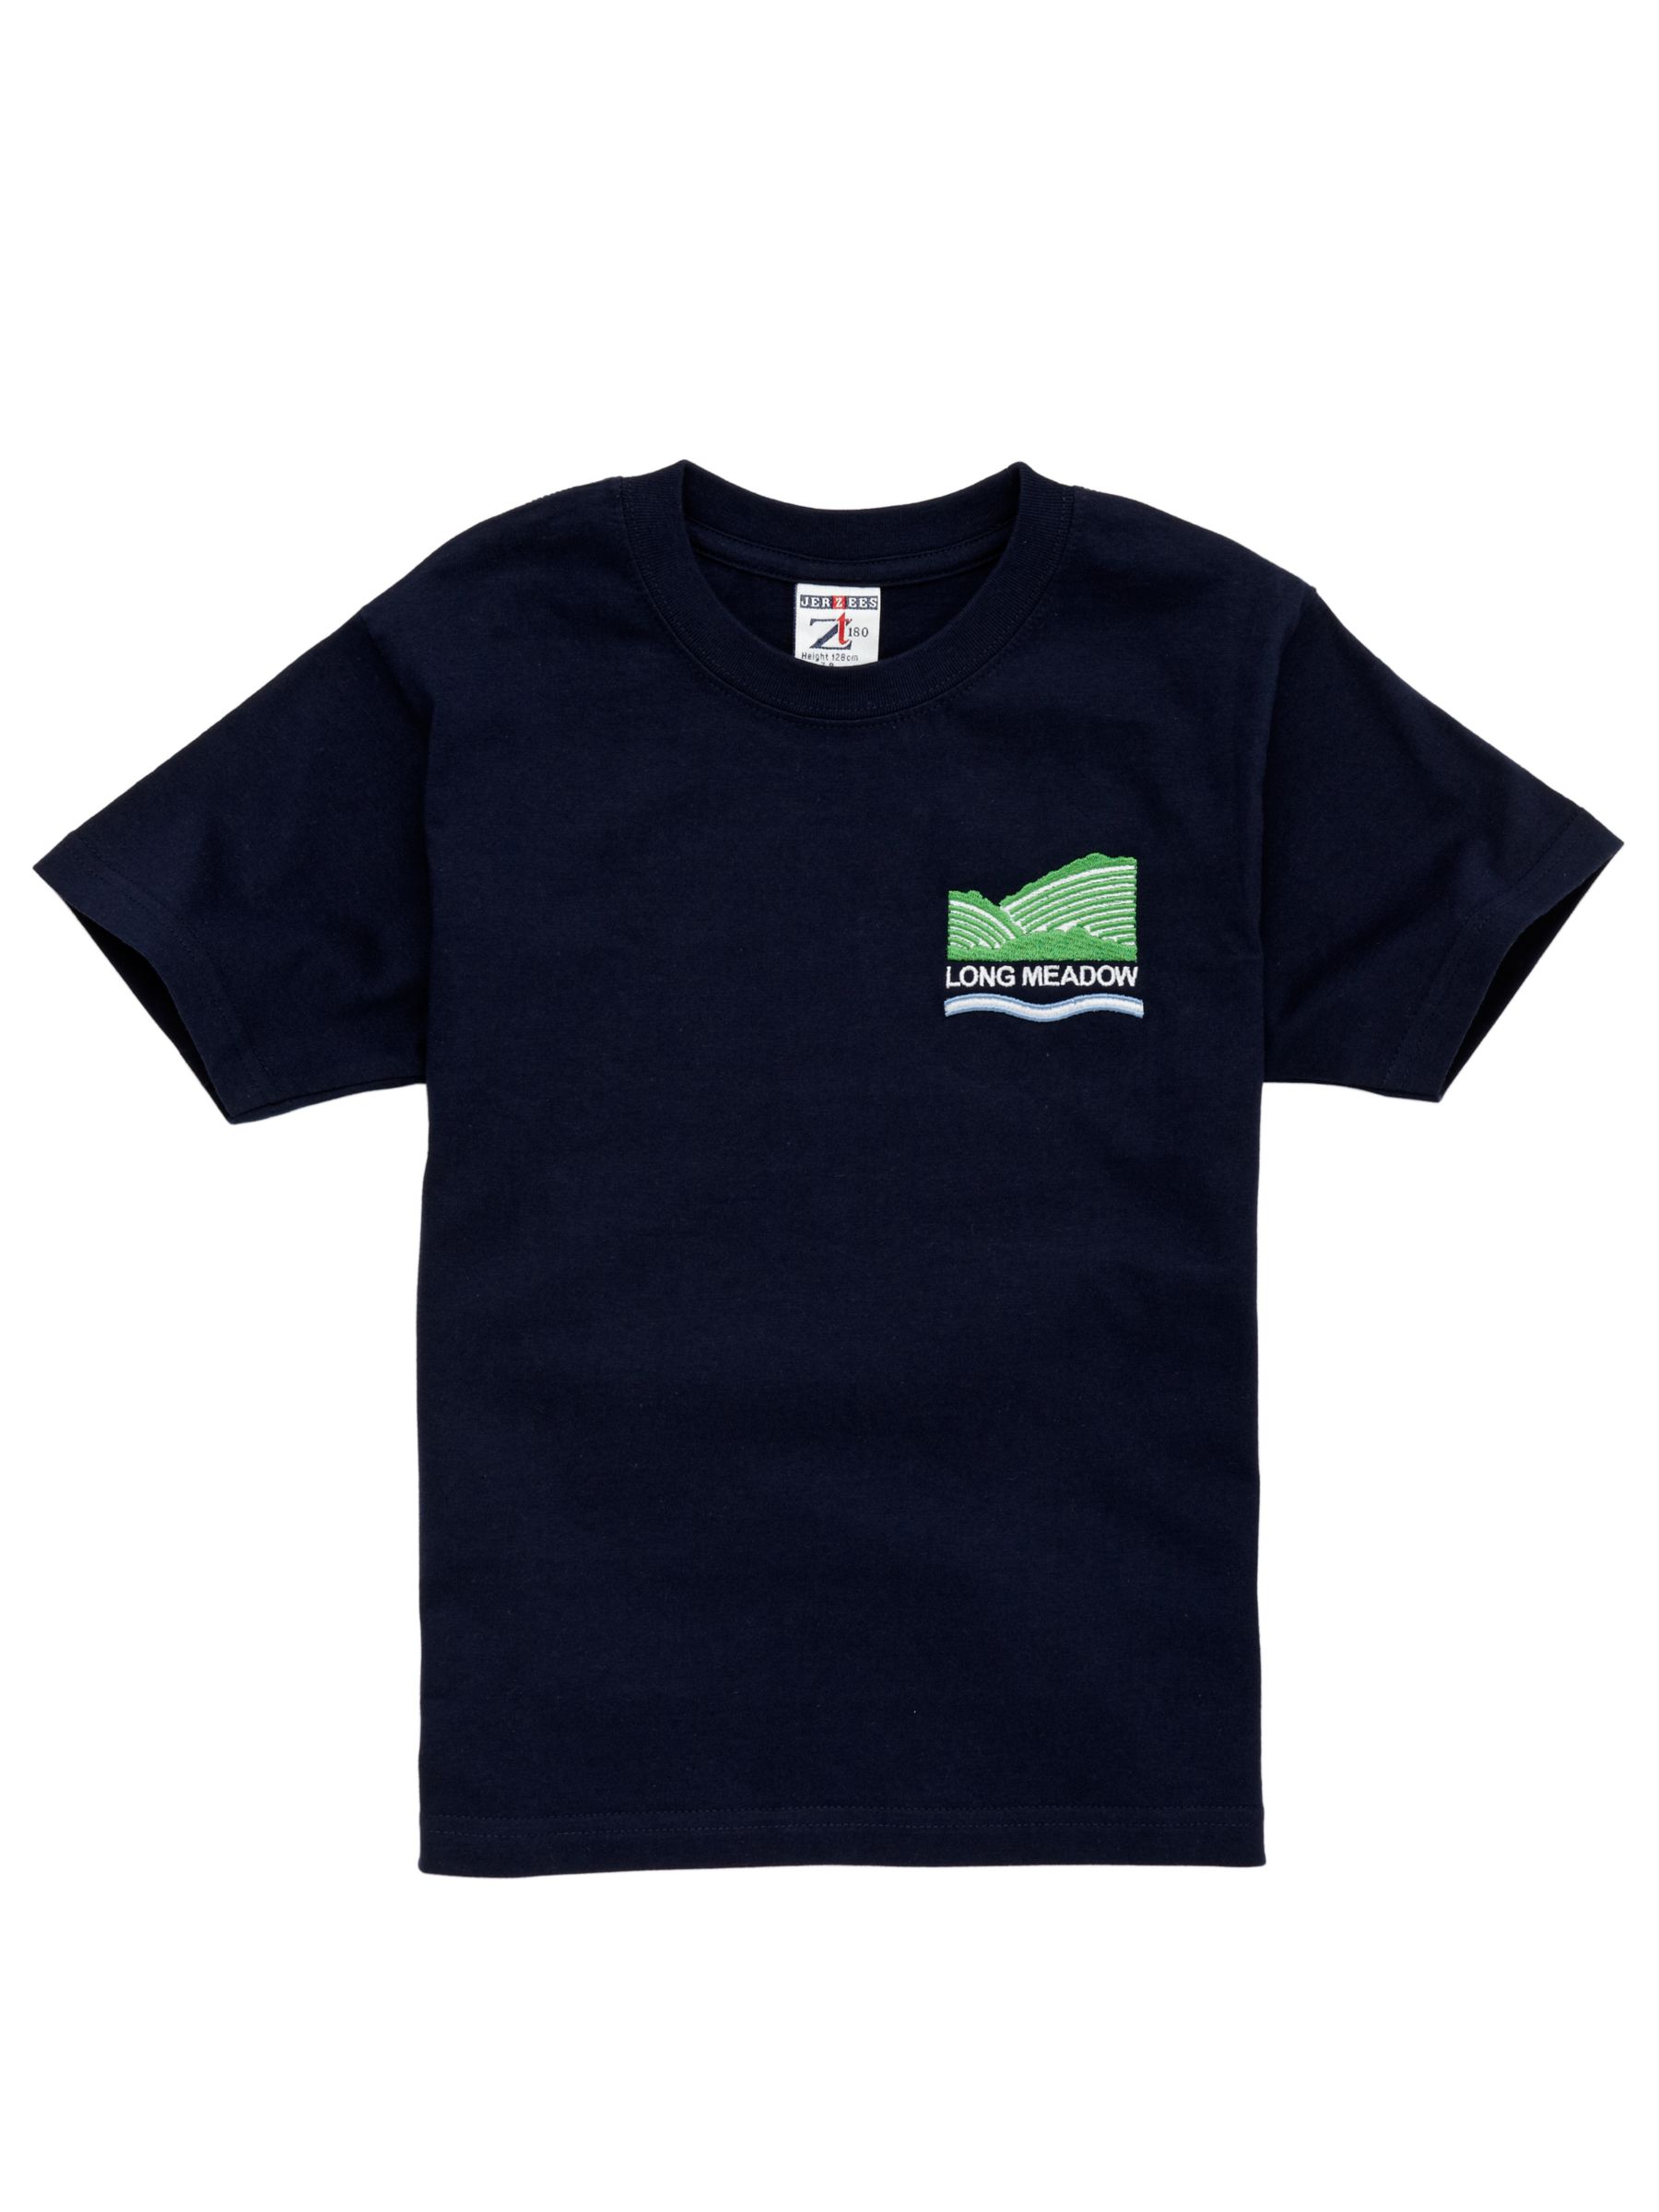 Unisex Sports T-Shirt, Navy